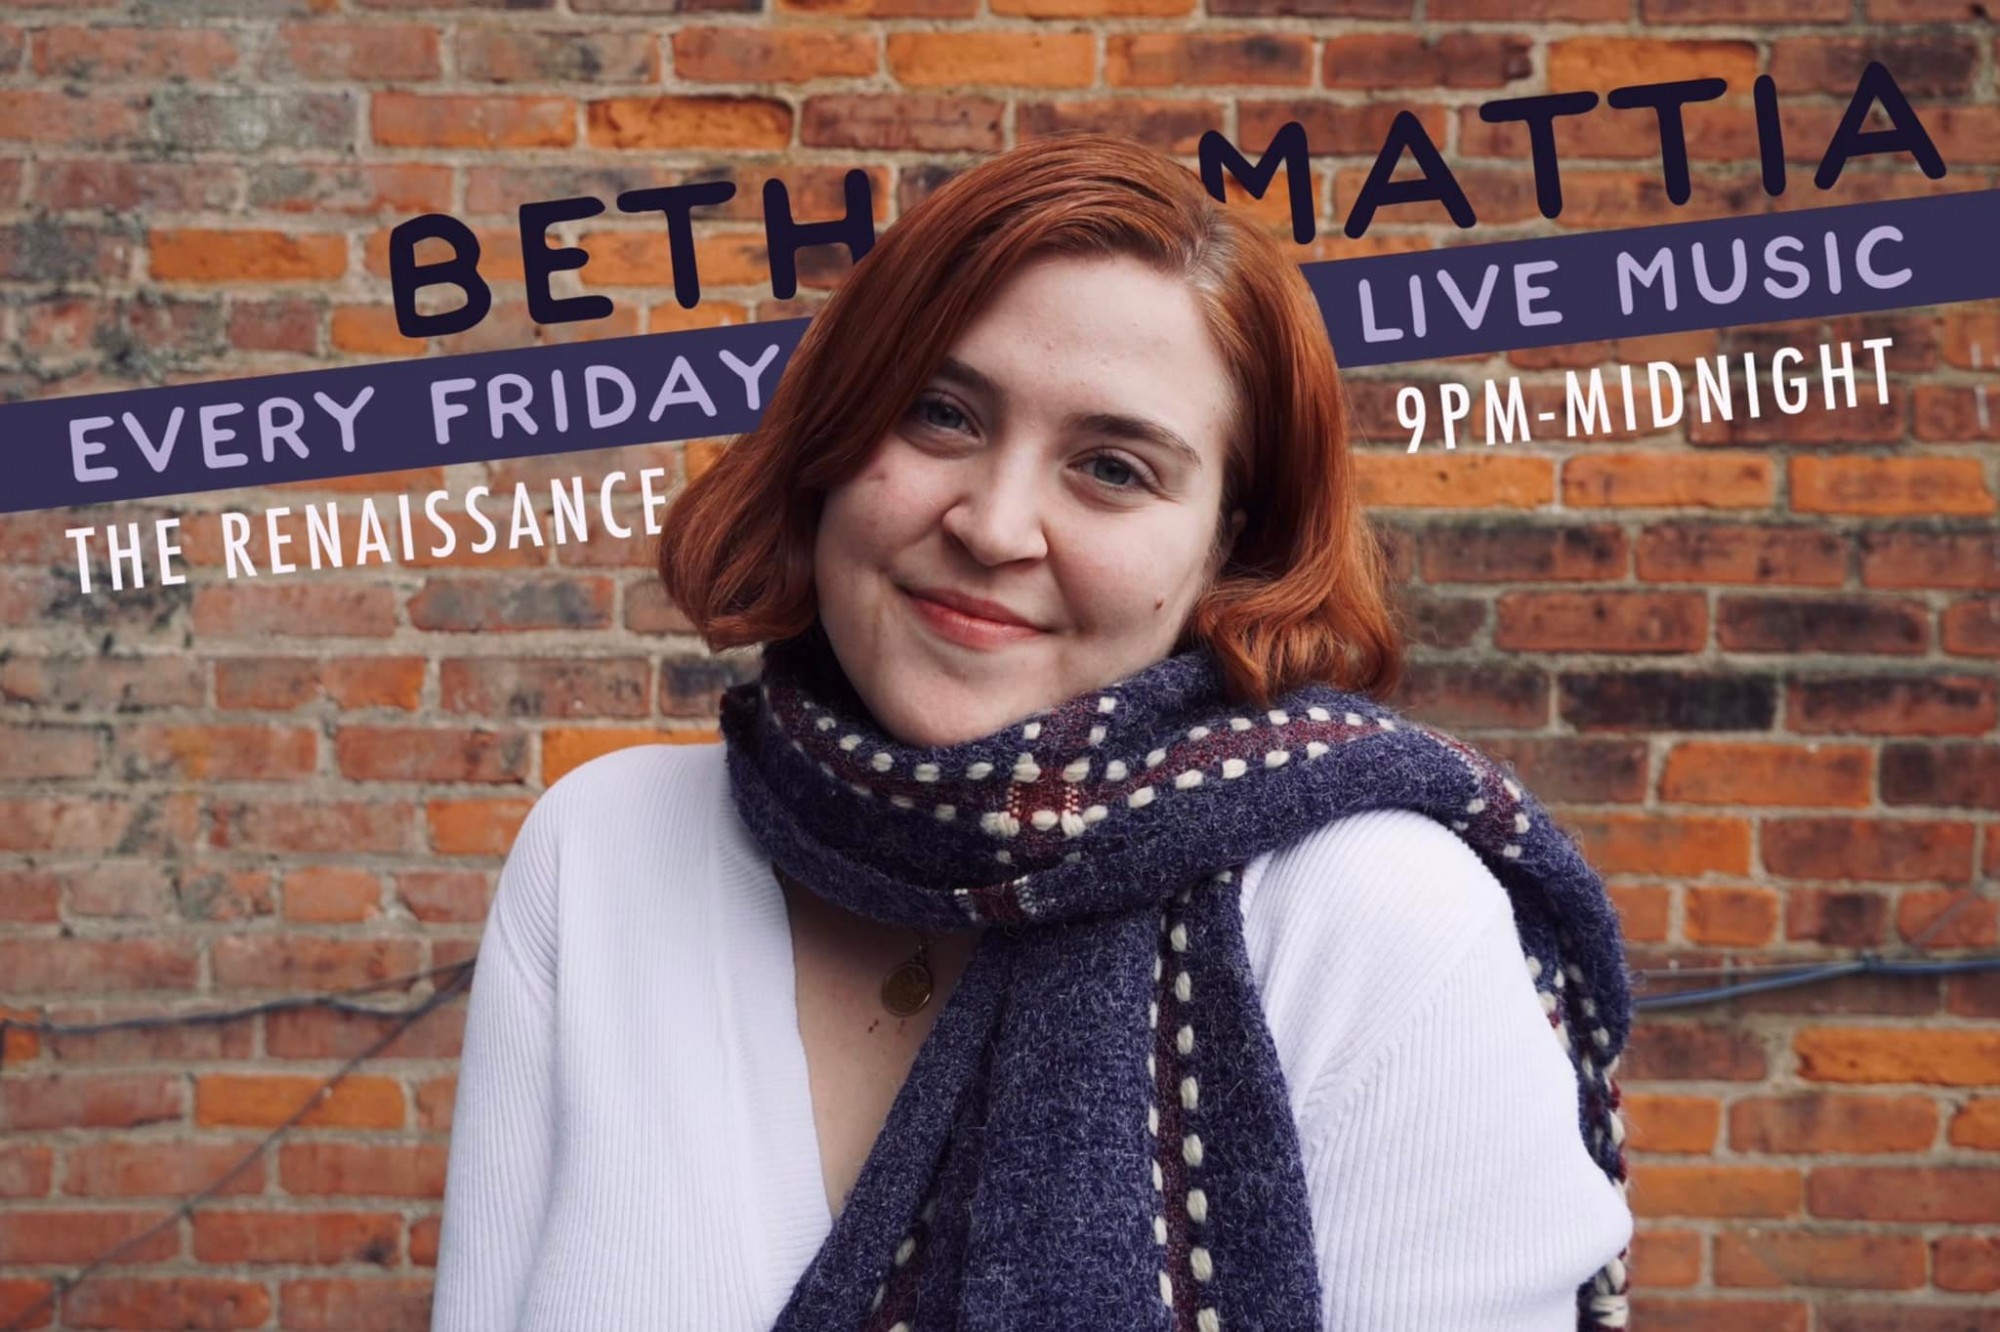 Live music with Beth Mattia!